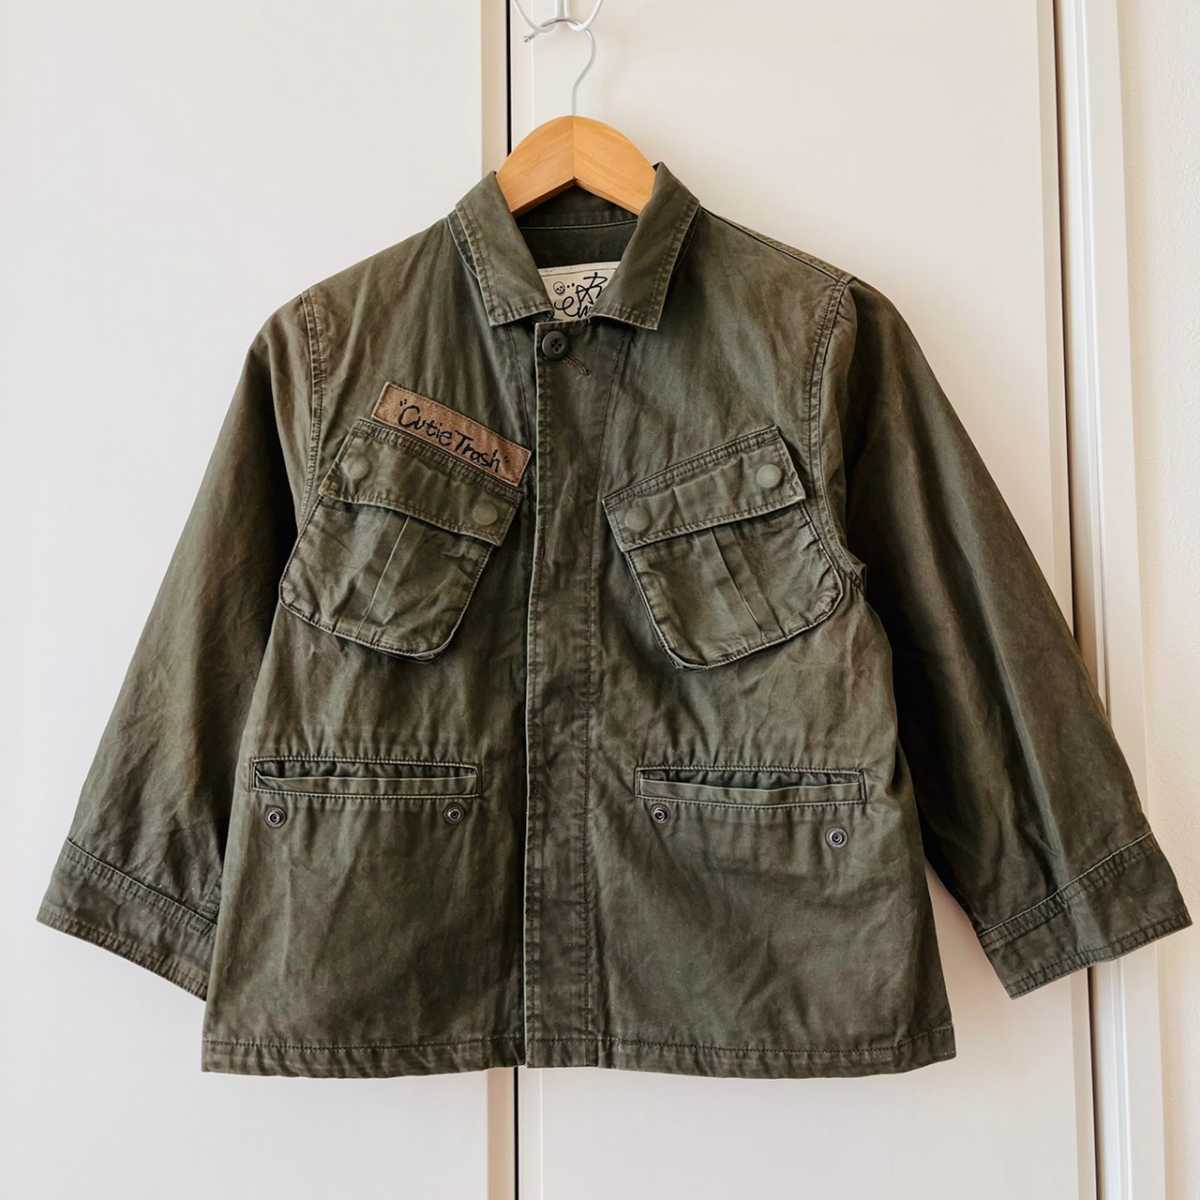 H365cL{RNA inca-ruene- ink } size M military jacket old clothes woman khaki lady's JACKET Work jacket used